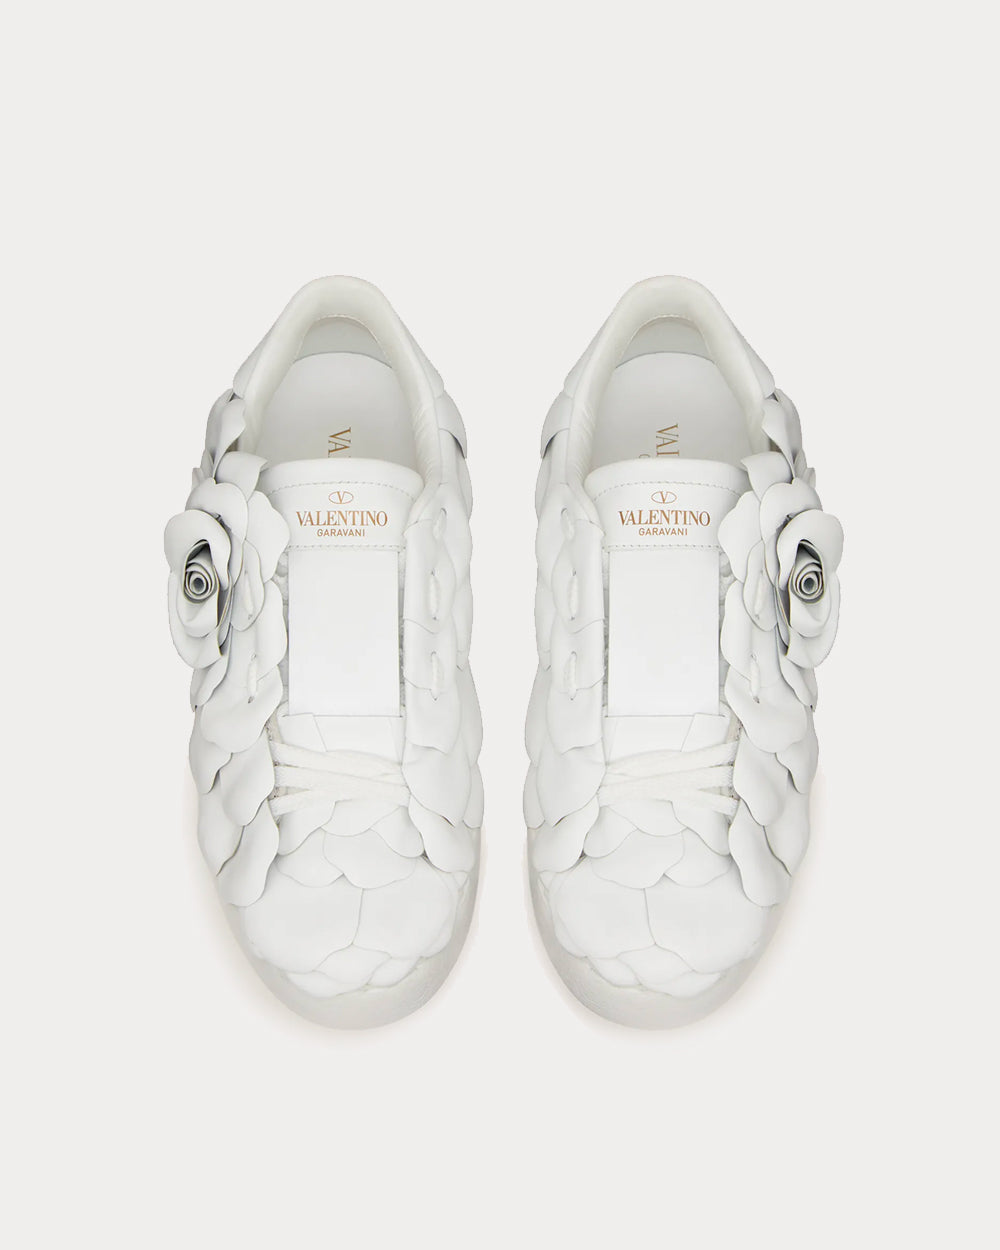 Valentino - Garavani Atelier Petal Effect White Low Top Sneakers